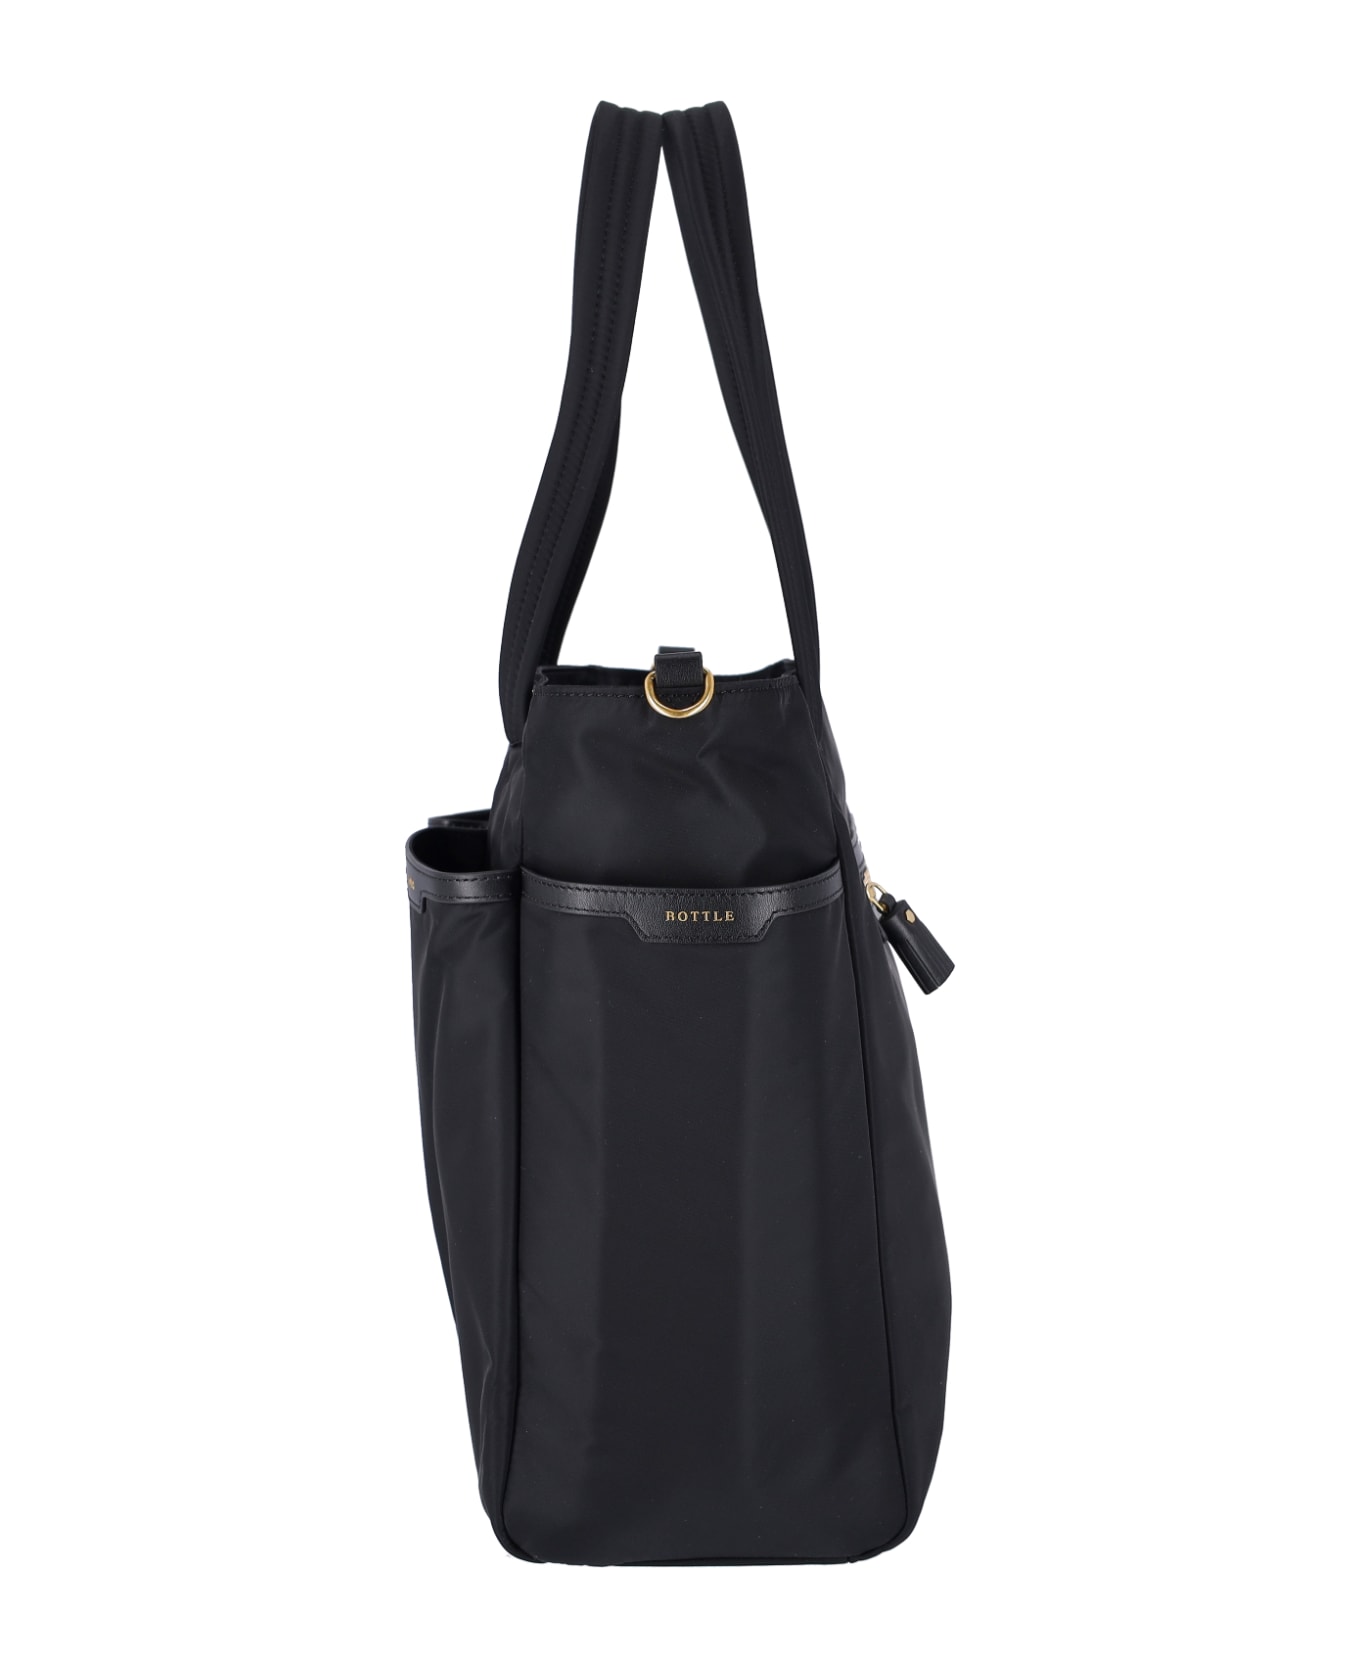 Anya Hindmarch Tote Bag 'multi-pocket' - Black   トートバッグ